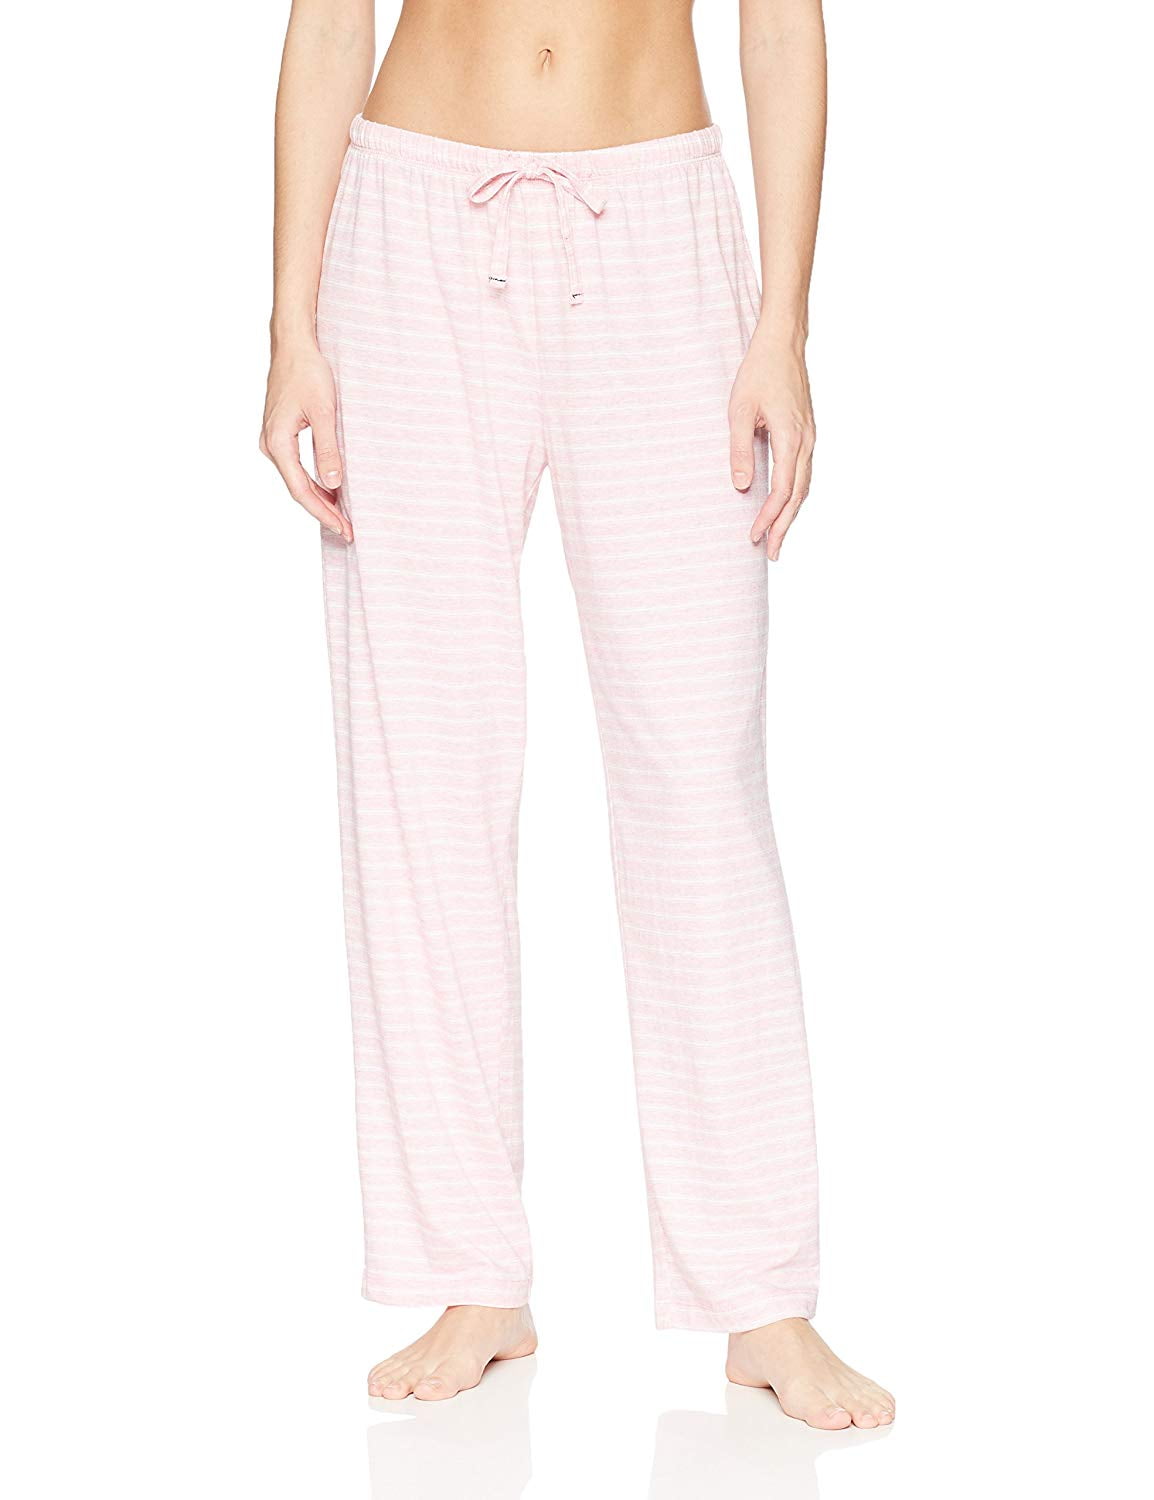 Alfani - Nautica Women's Knit Printed Pajama Pants Pink Heather Size 2 ...